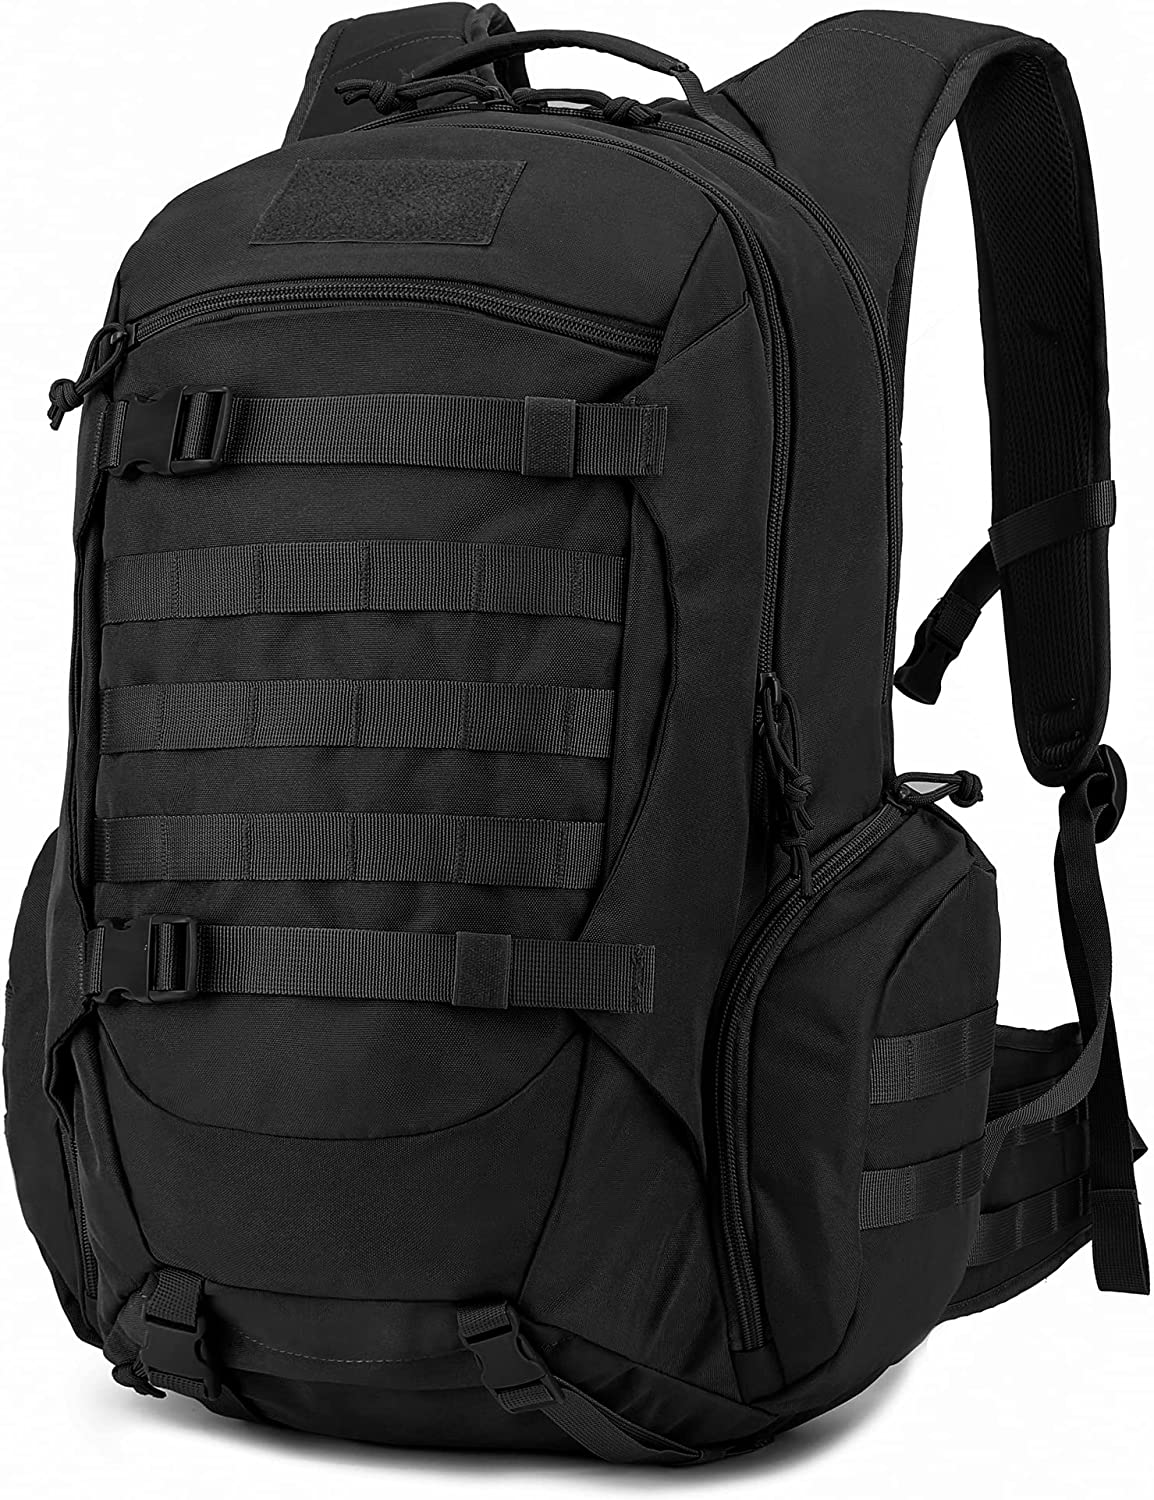 Waterdichte Rugzak Tactical Backpack inclusief gratis Paracord